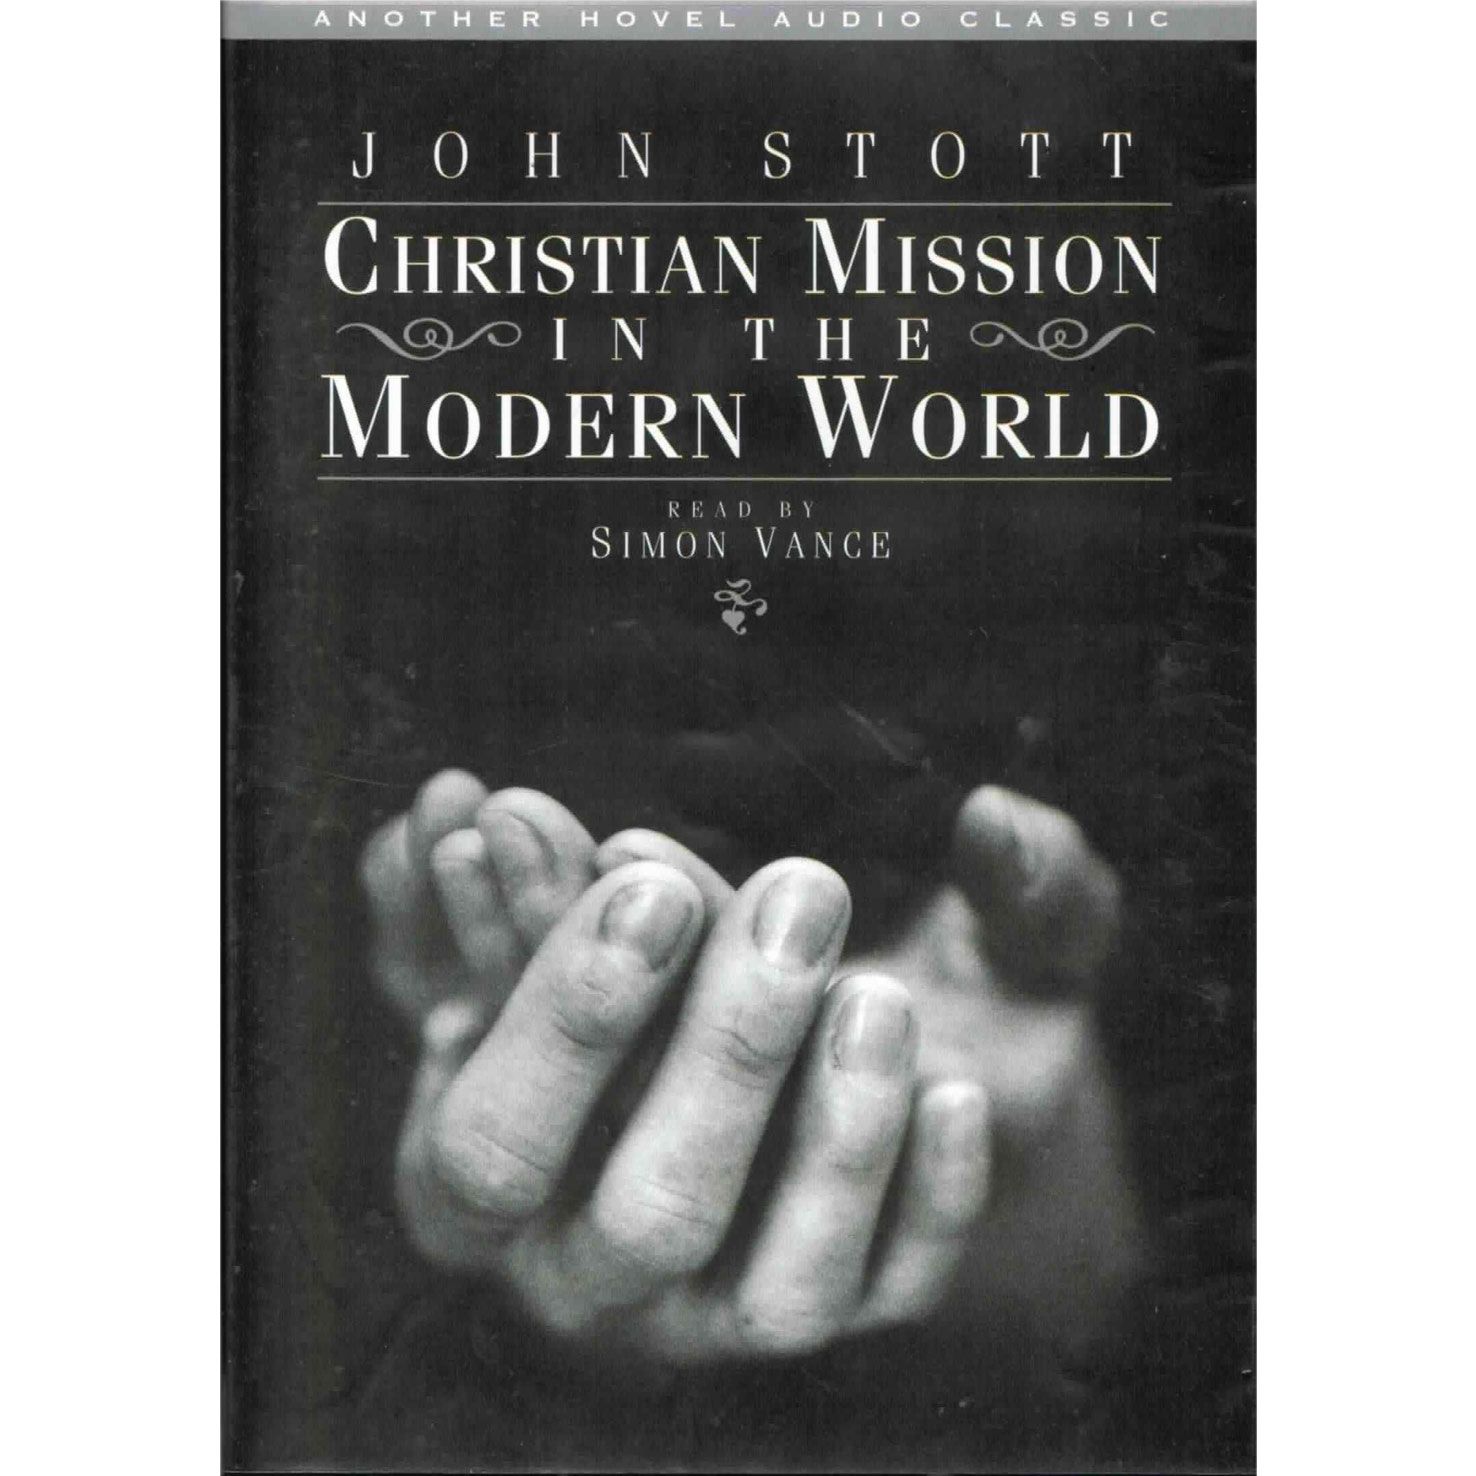 Audio Book - Christian Mission